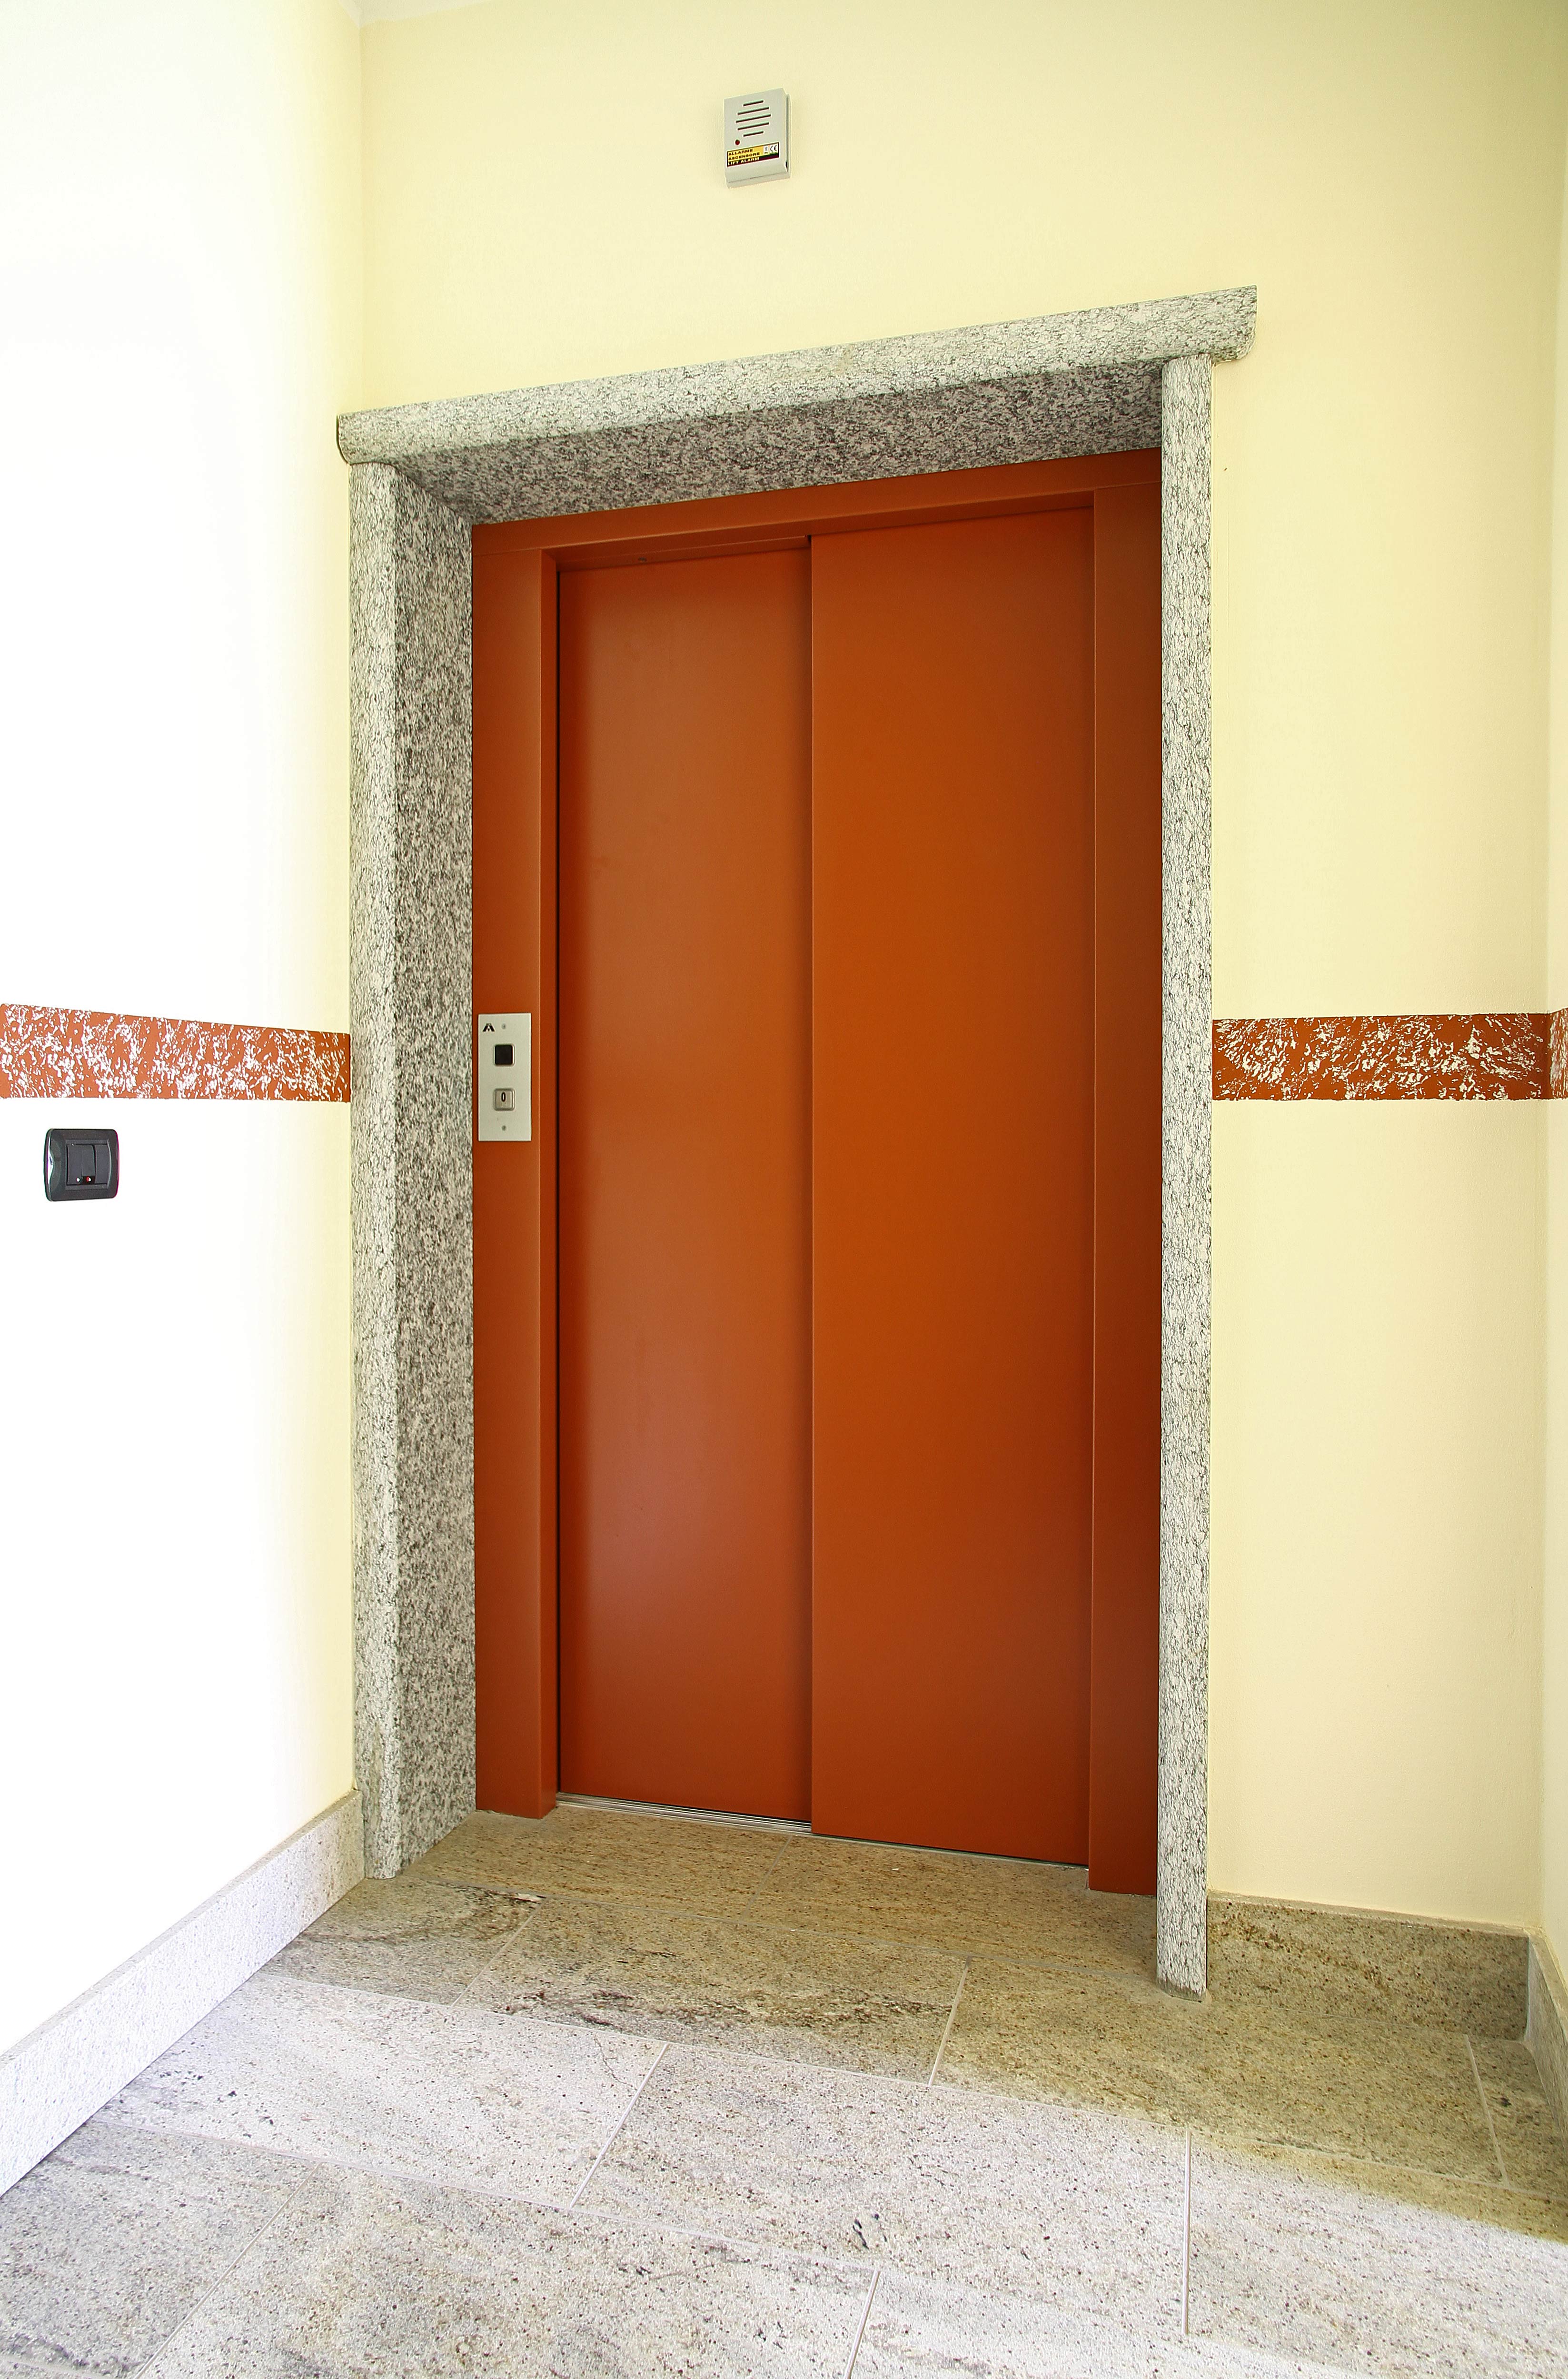 File:Wittur-hydra-elevator-door.jpg - Wikimedia Commons